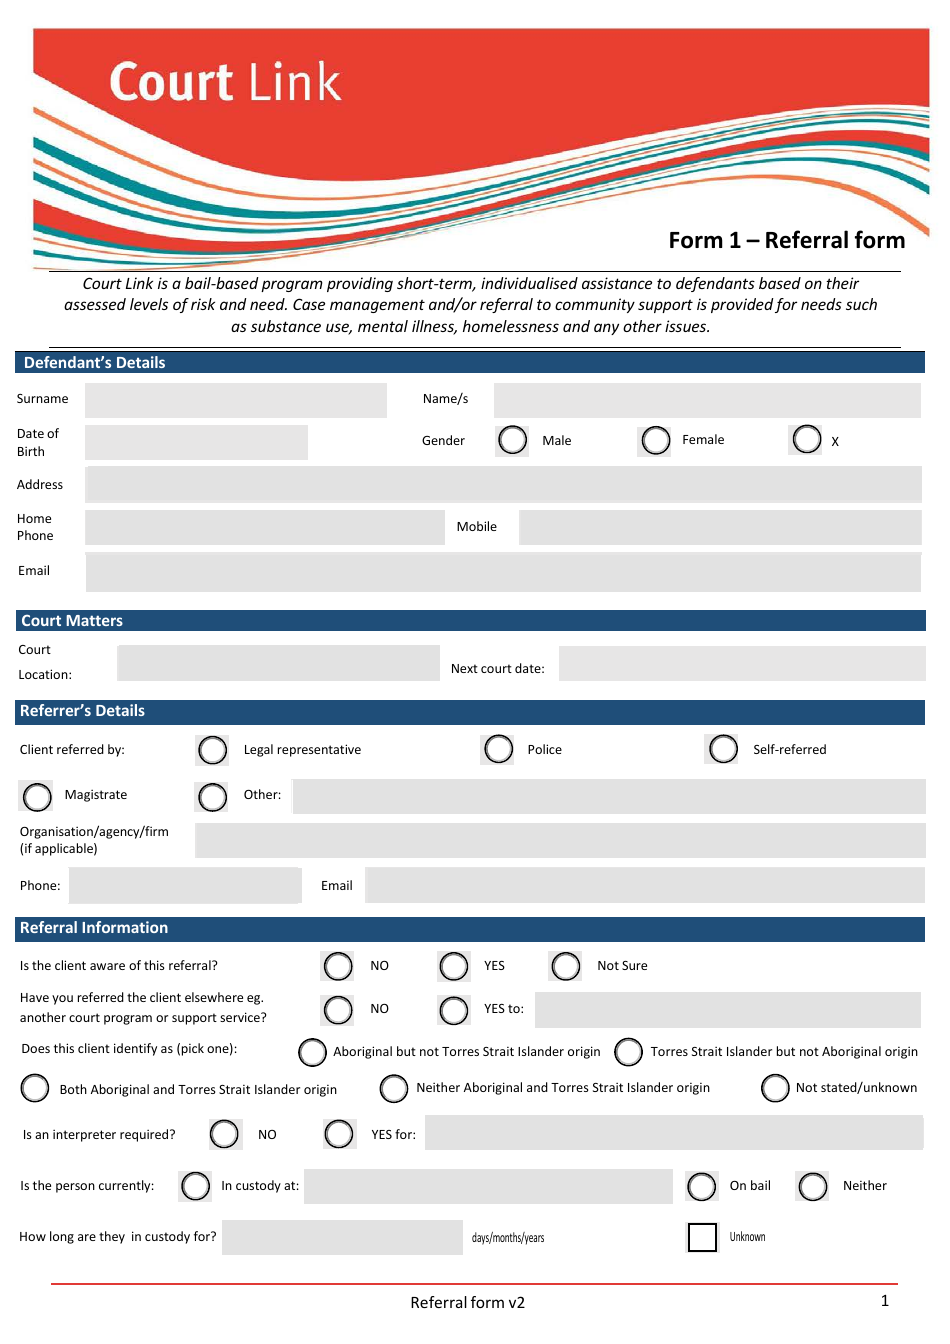 Form 1 Court Link Referral Form - Queensland, Australia, Page 1